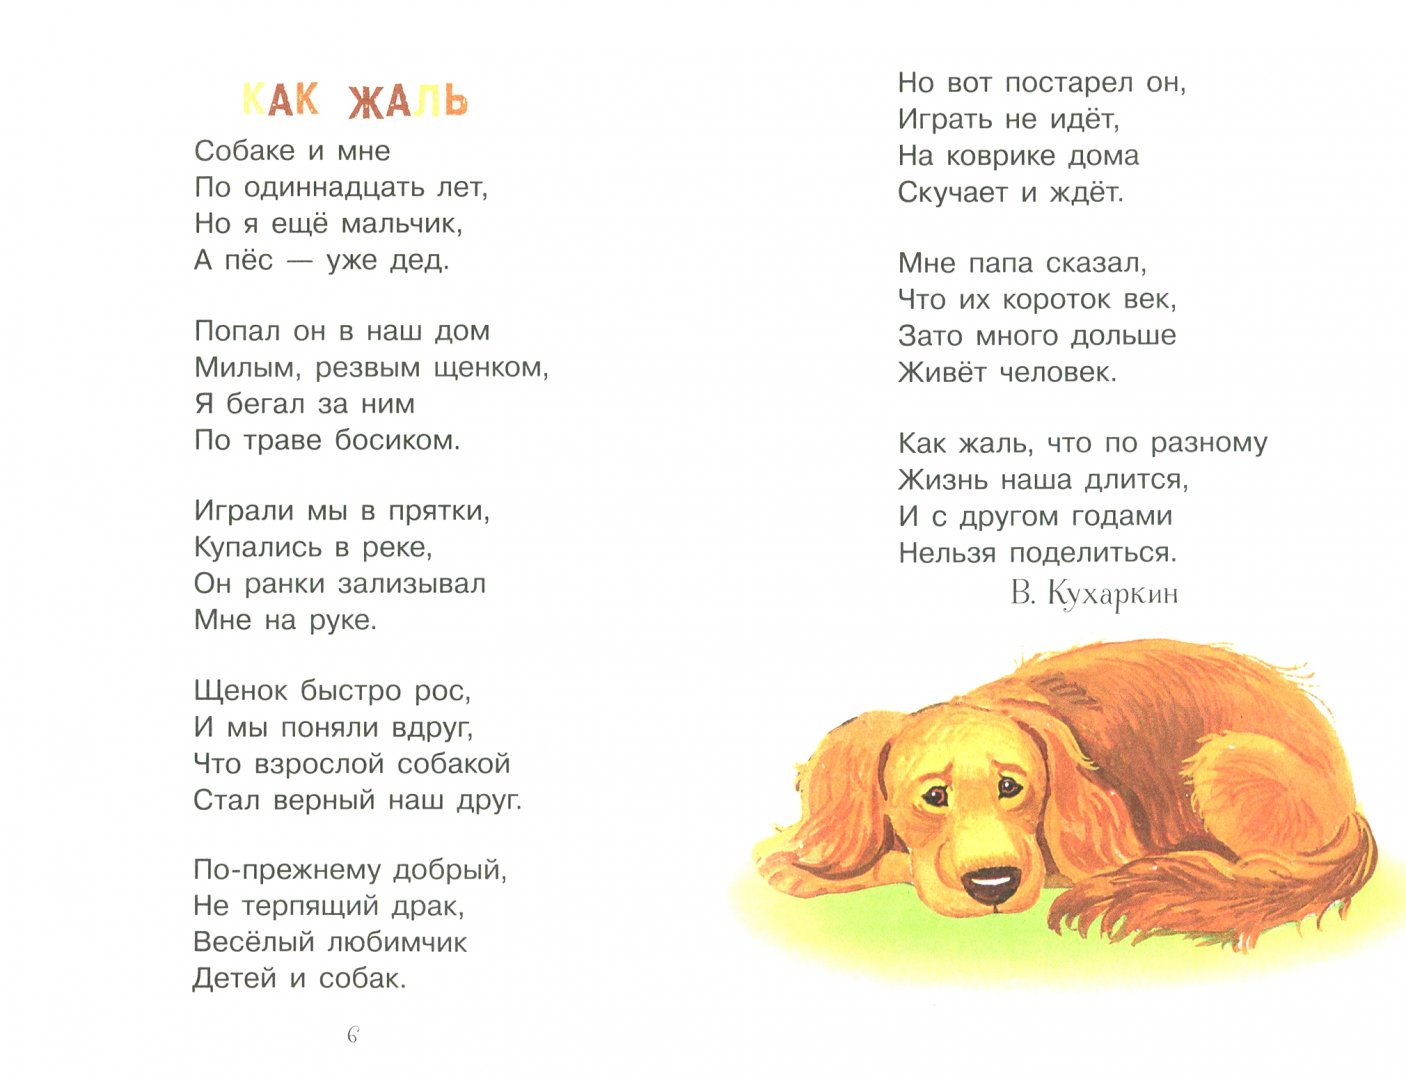 Песня хочу собачку. Стих про щенка для детей. Стих про собаку для детей. Детский стих про щенка. Тексты детских песен про собак.